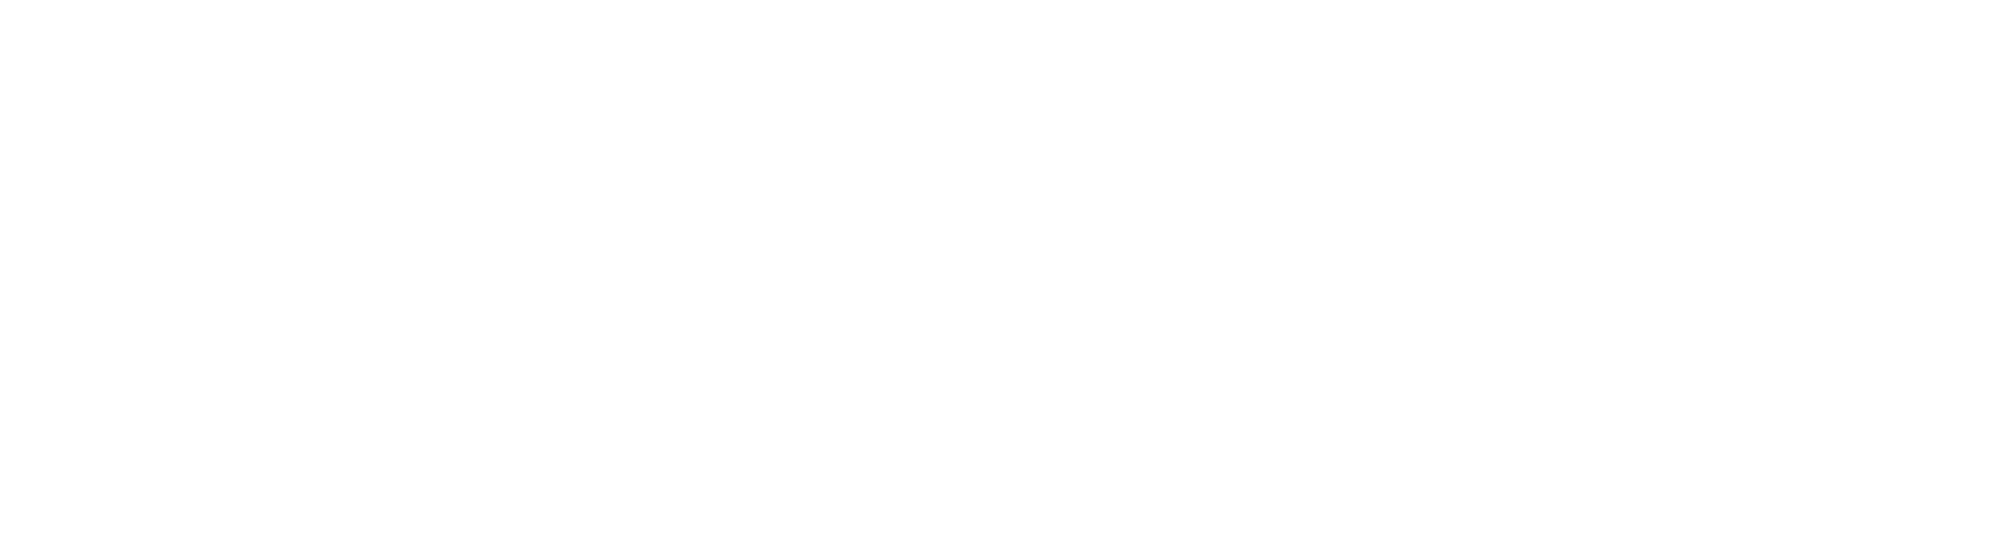 SBA: U.S. Small Business Administration